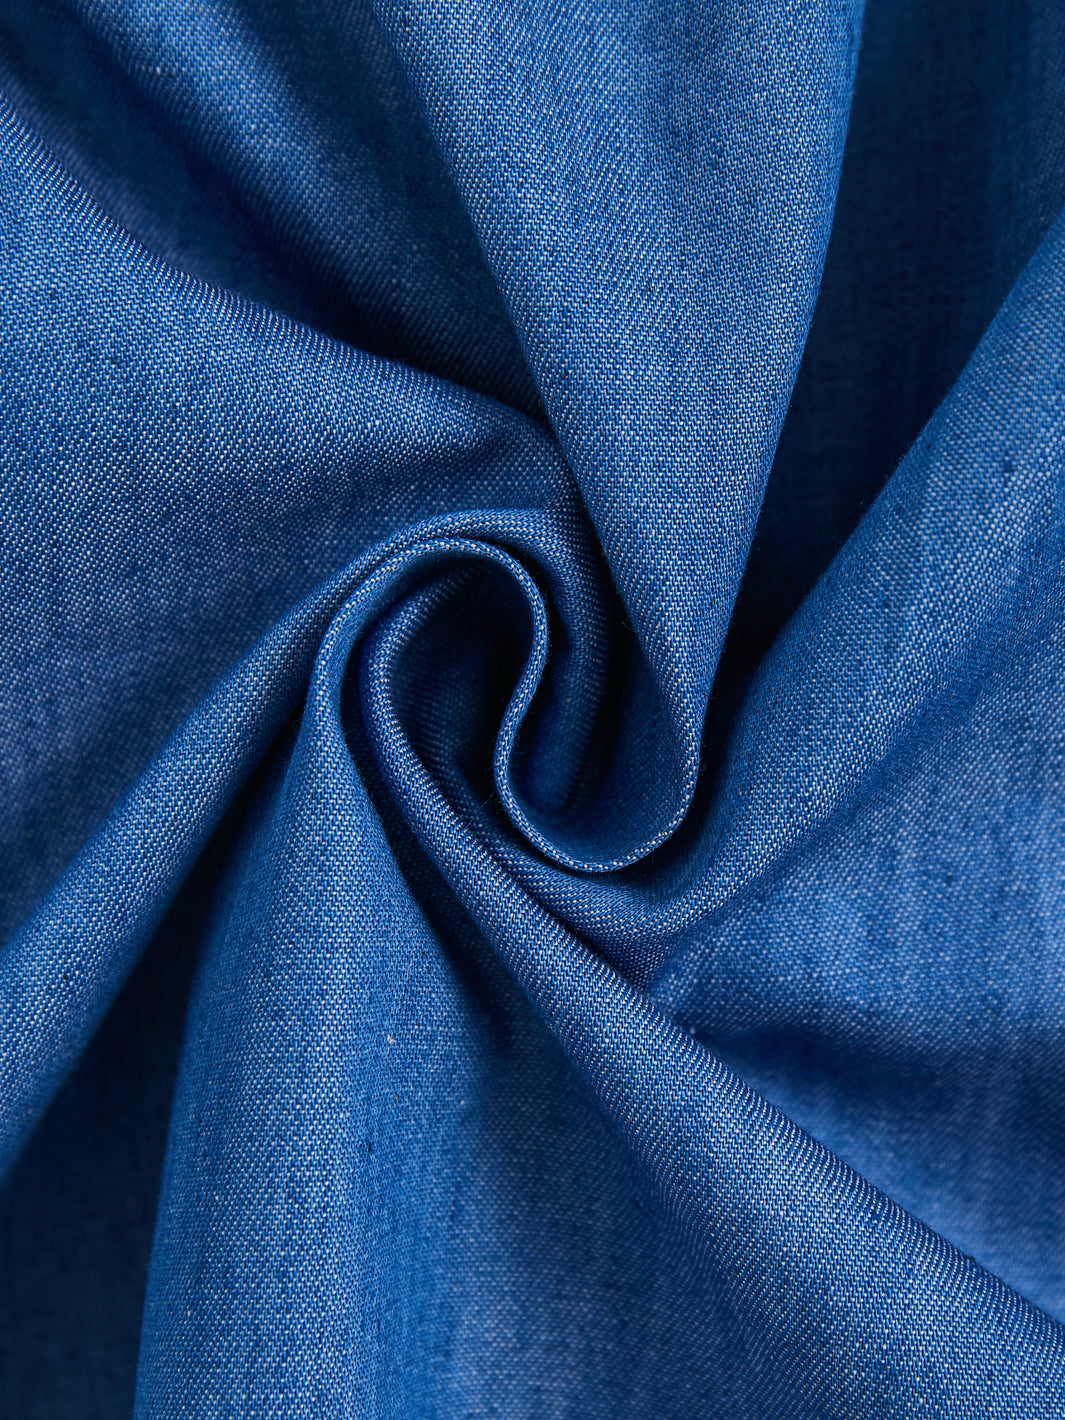 Denim Maxi Length Skirt - Blue